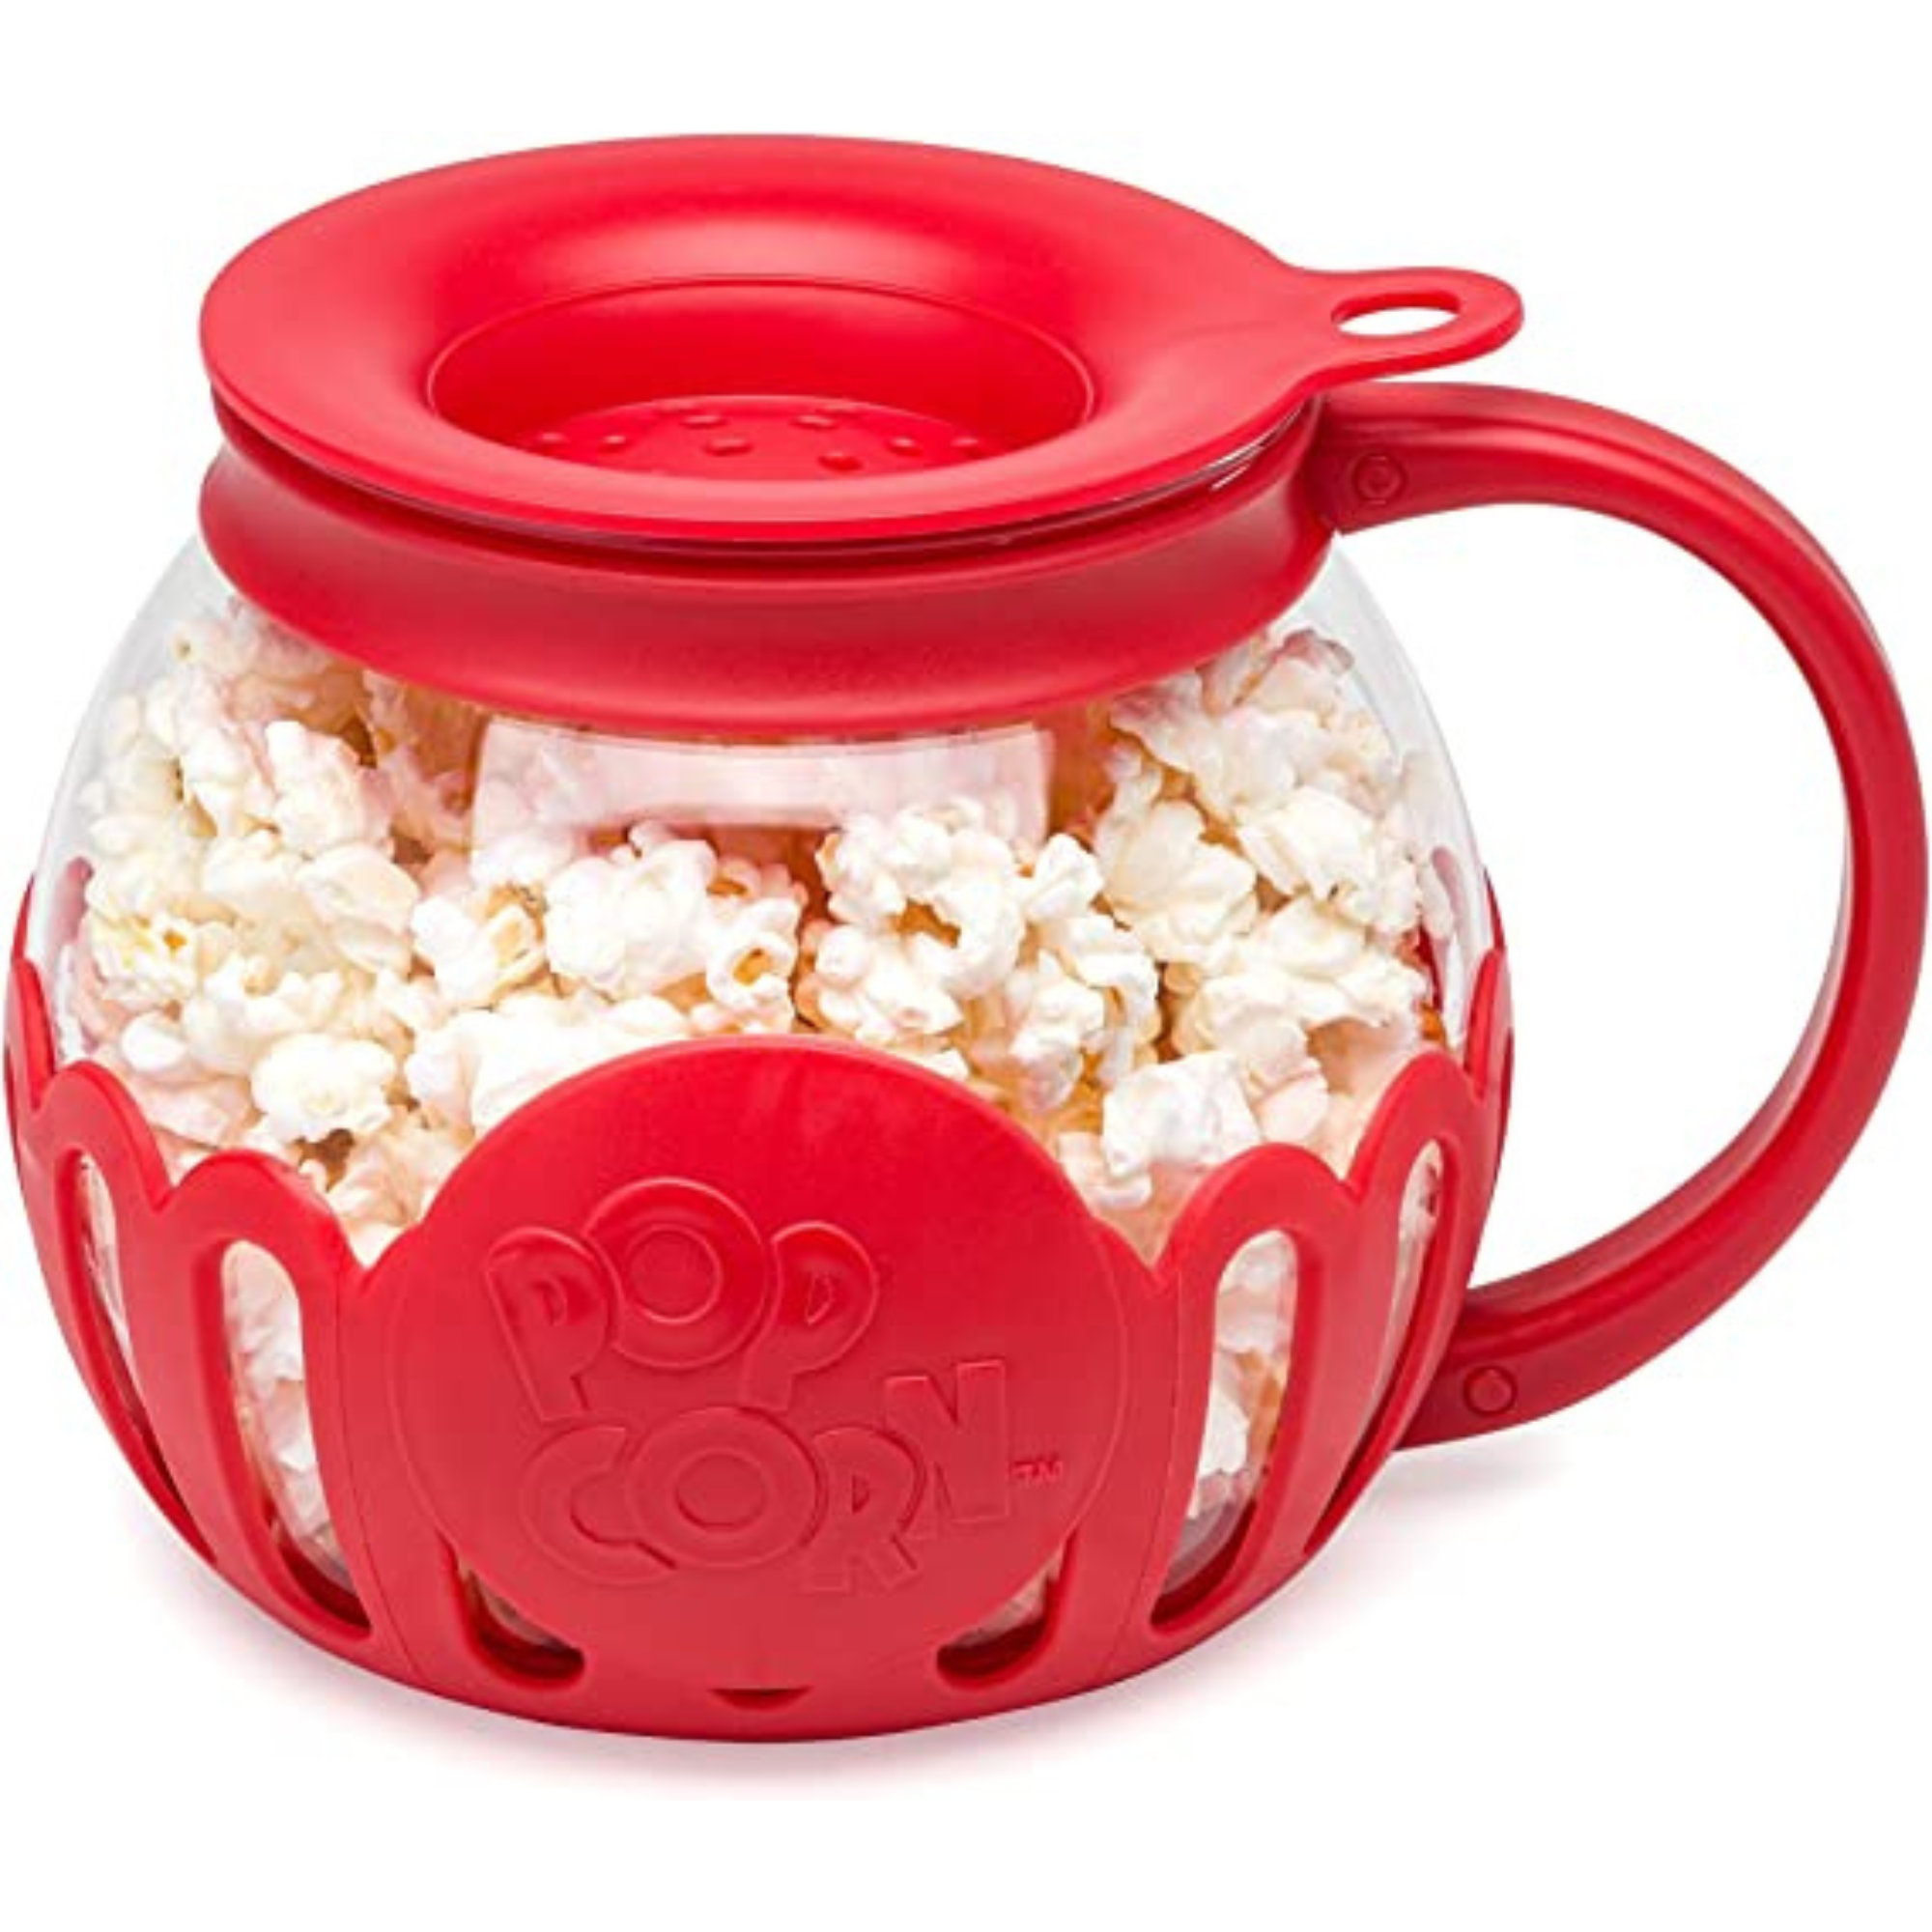 Zulay Kitchen Microwave Popcorn Popper & Reviews